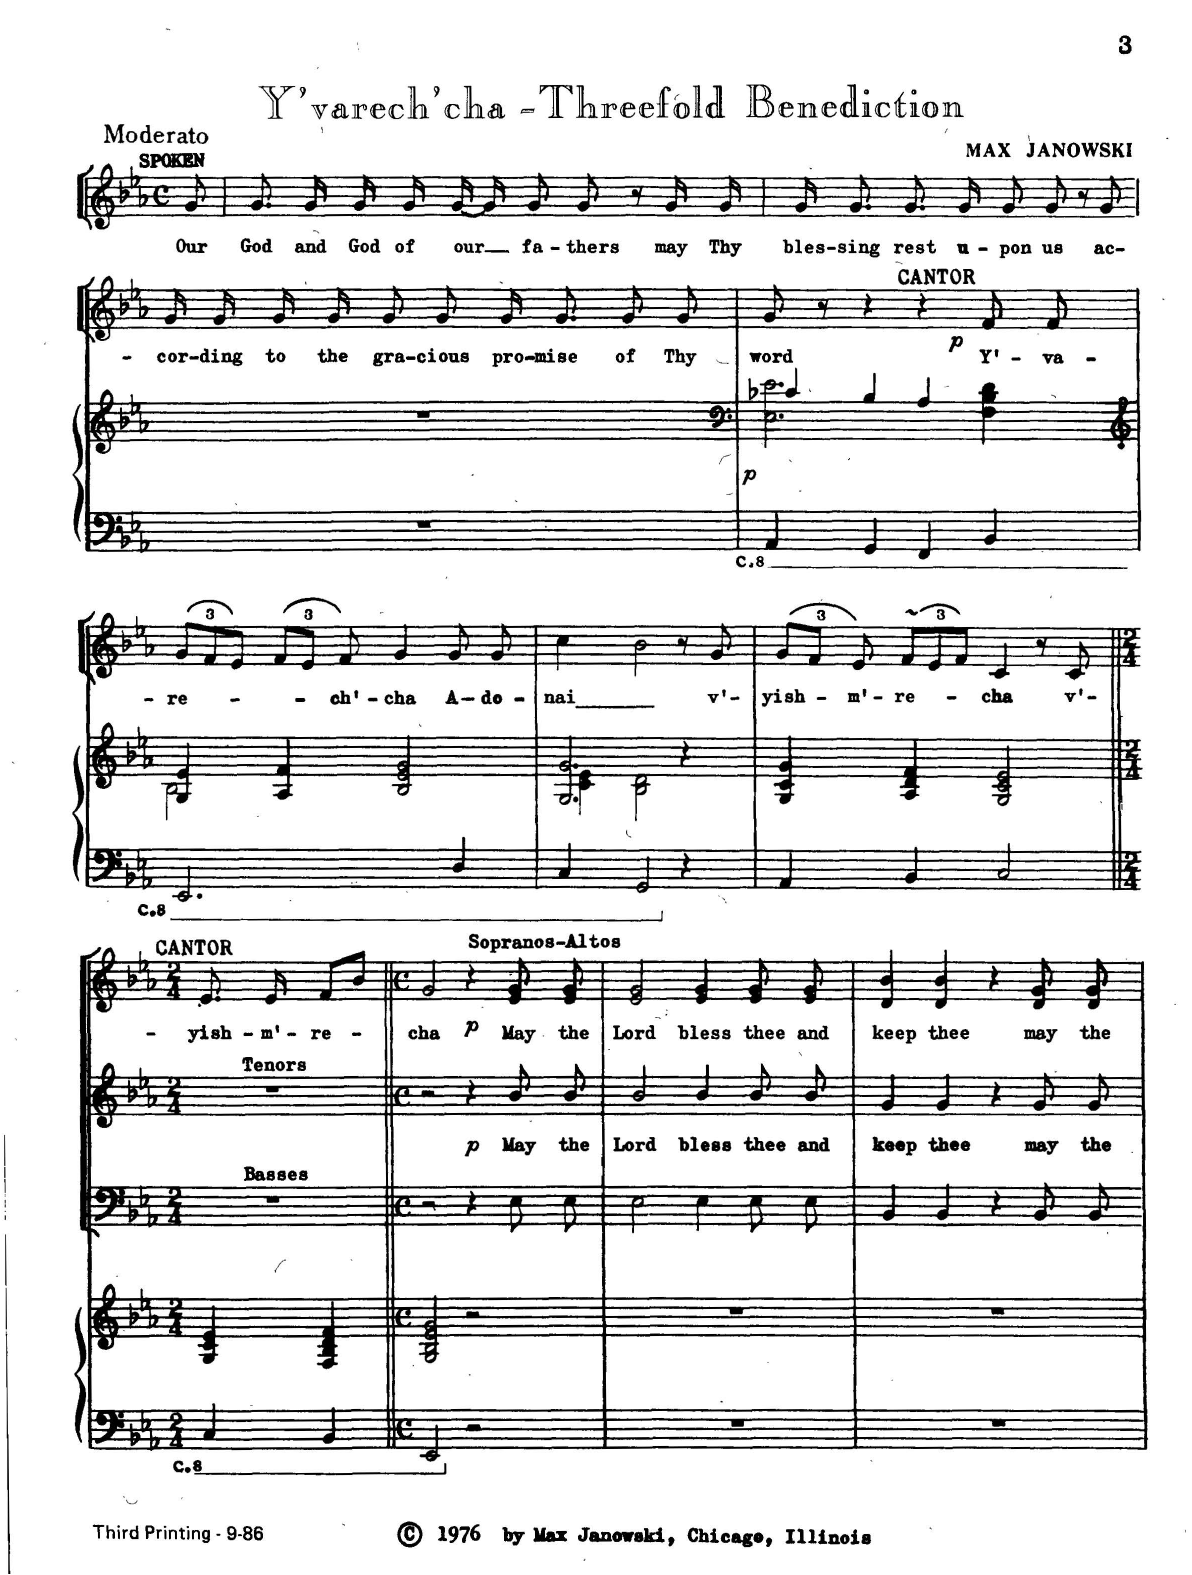 Max Janowski Y'varech'cha (Threefold Benediction) Sheet Music Notes & Chords for SATB Choir - Download or Print PDF